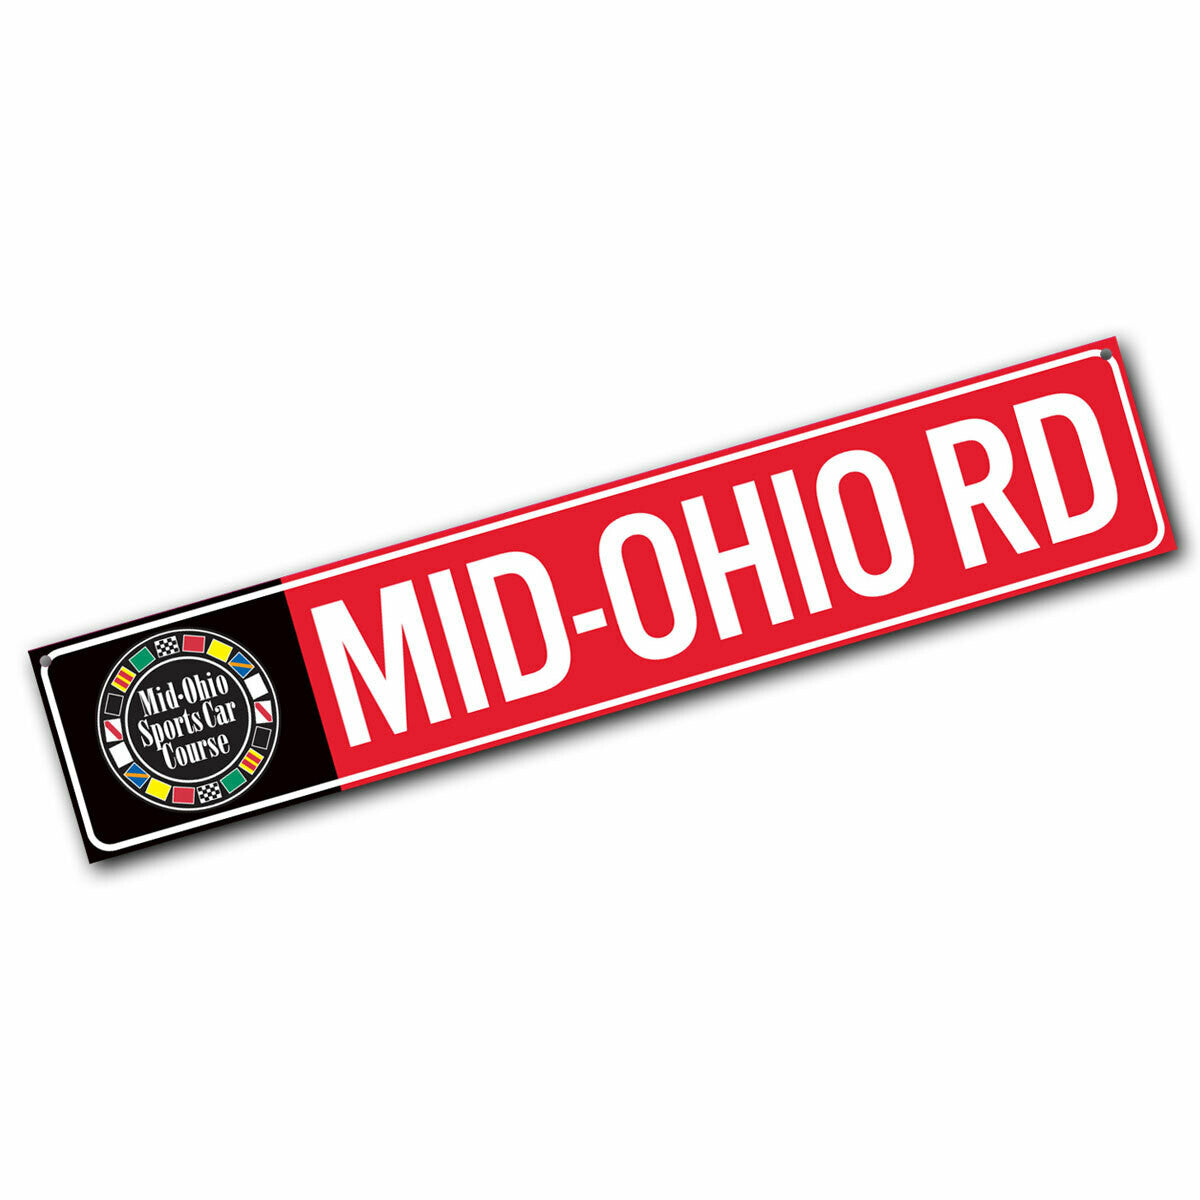 Street Sign - Mid-Ohio Rd